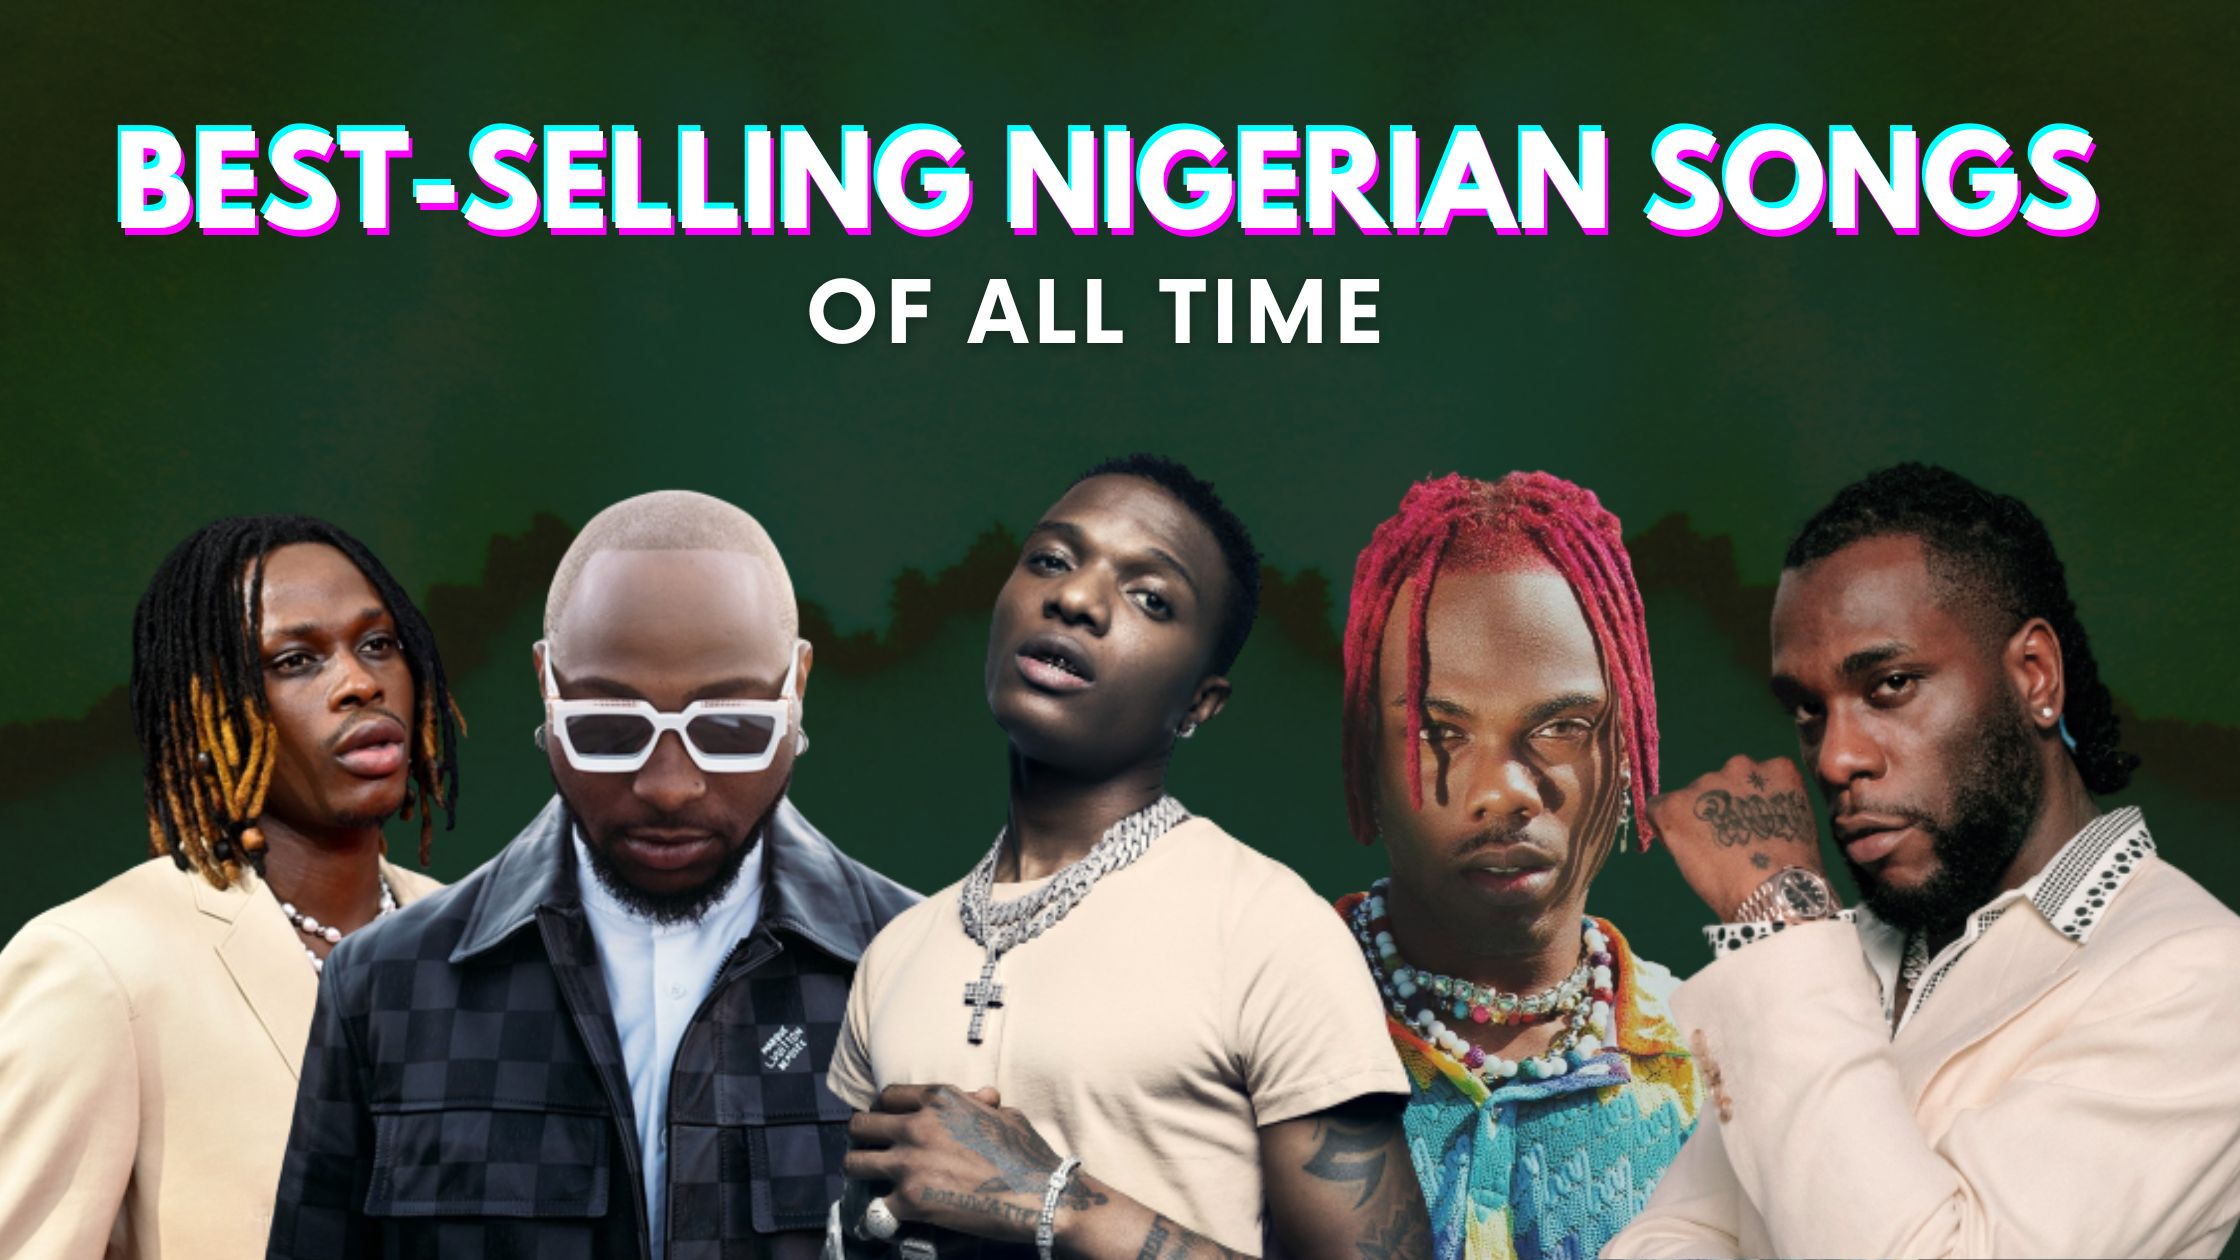 Top 10 BestSelling Nigerian Songs Of All Time